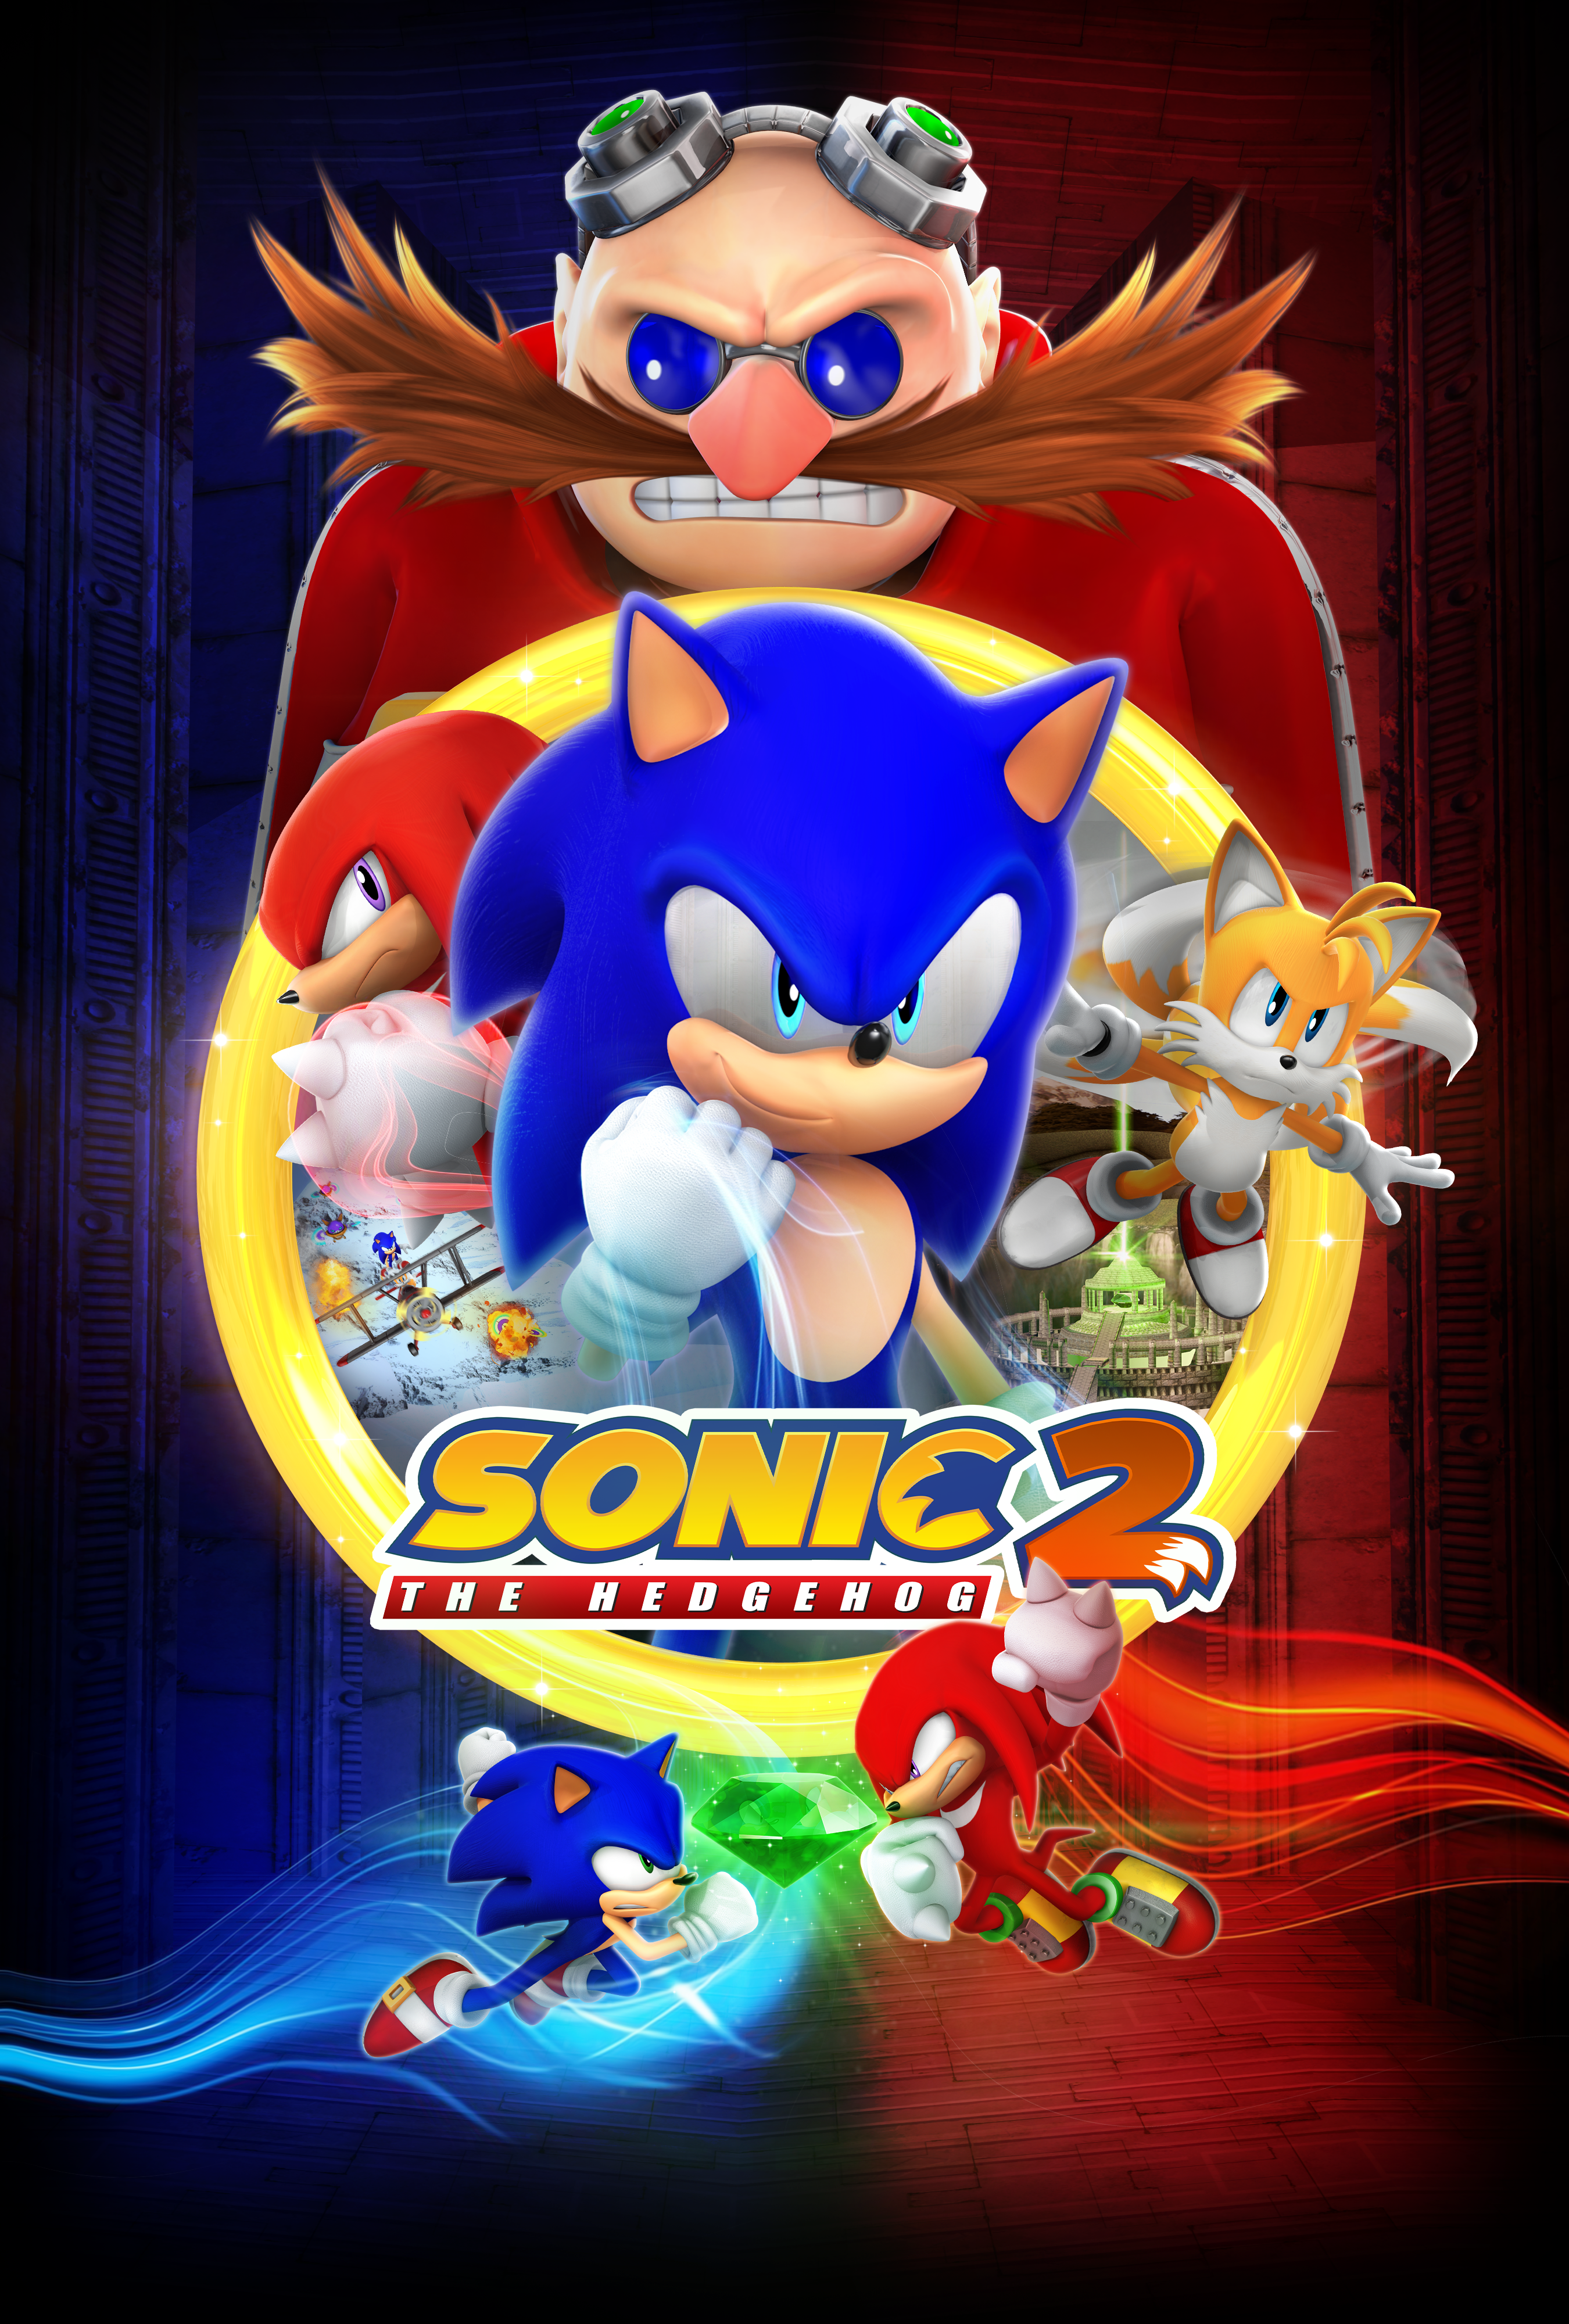 Sonic the Hedgehog 2 (Movie) by CREDD02 on DeviantArt